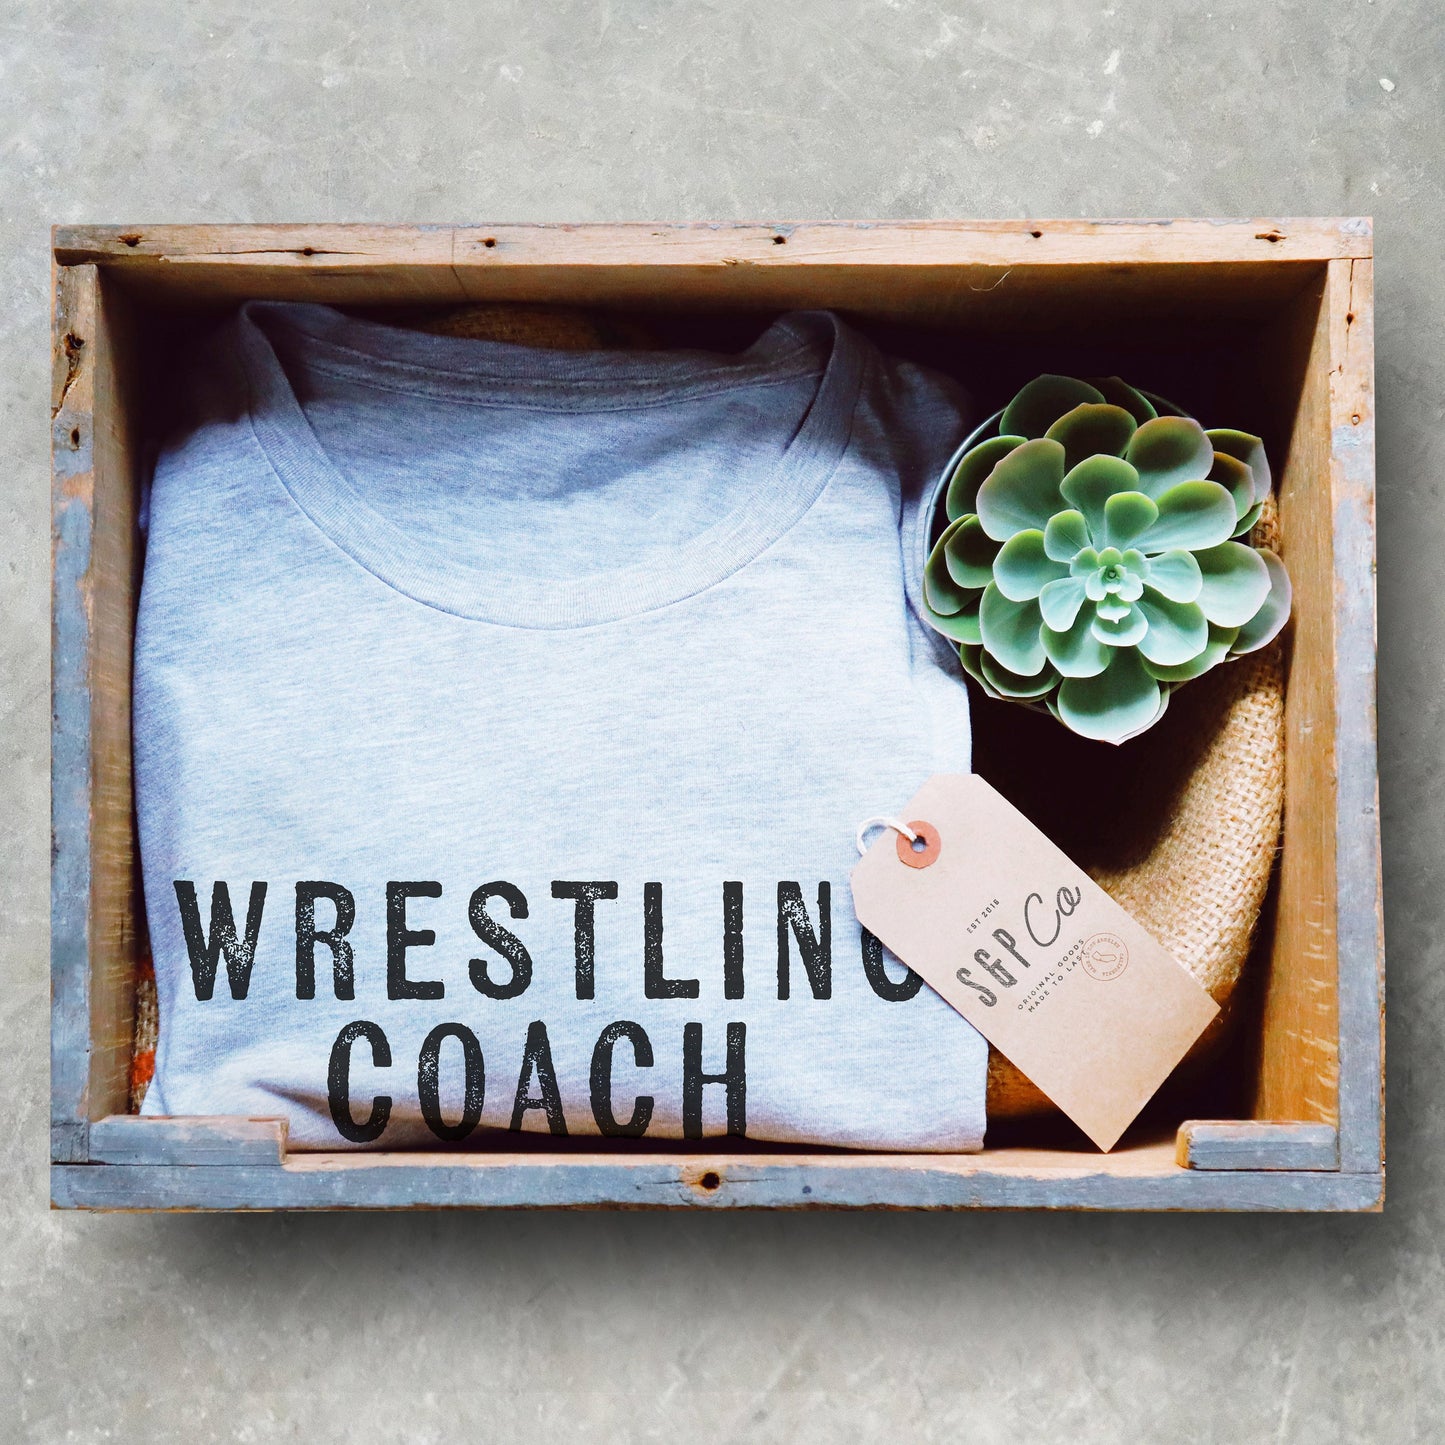 Wrestling Coach Unisex Shirt - Coach Gift, Wrestling Coach, Wrestler, Wrestling, Wrestling Fan, Wrestling T-Shirt, Coaches Gift